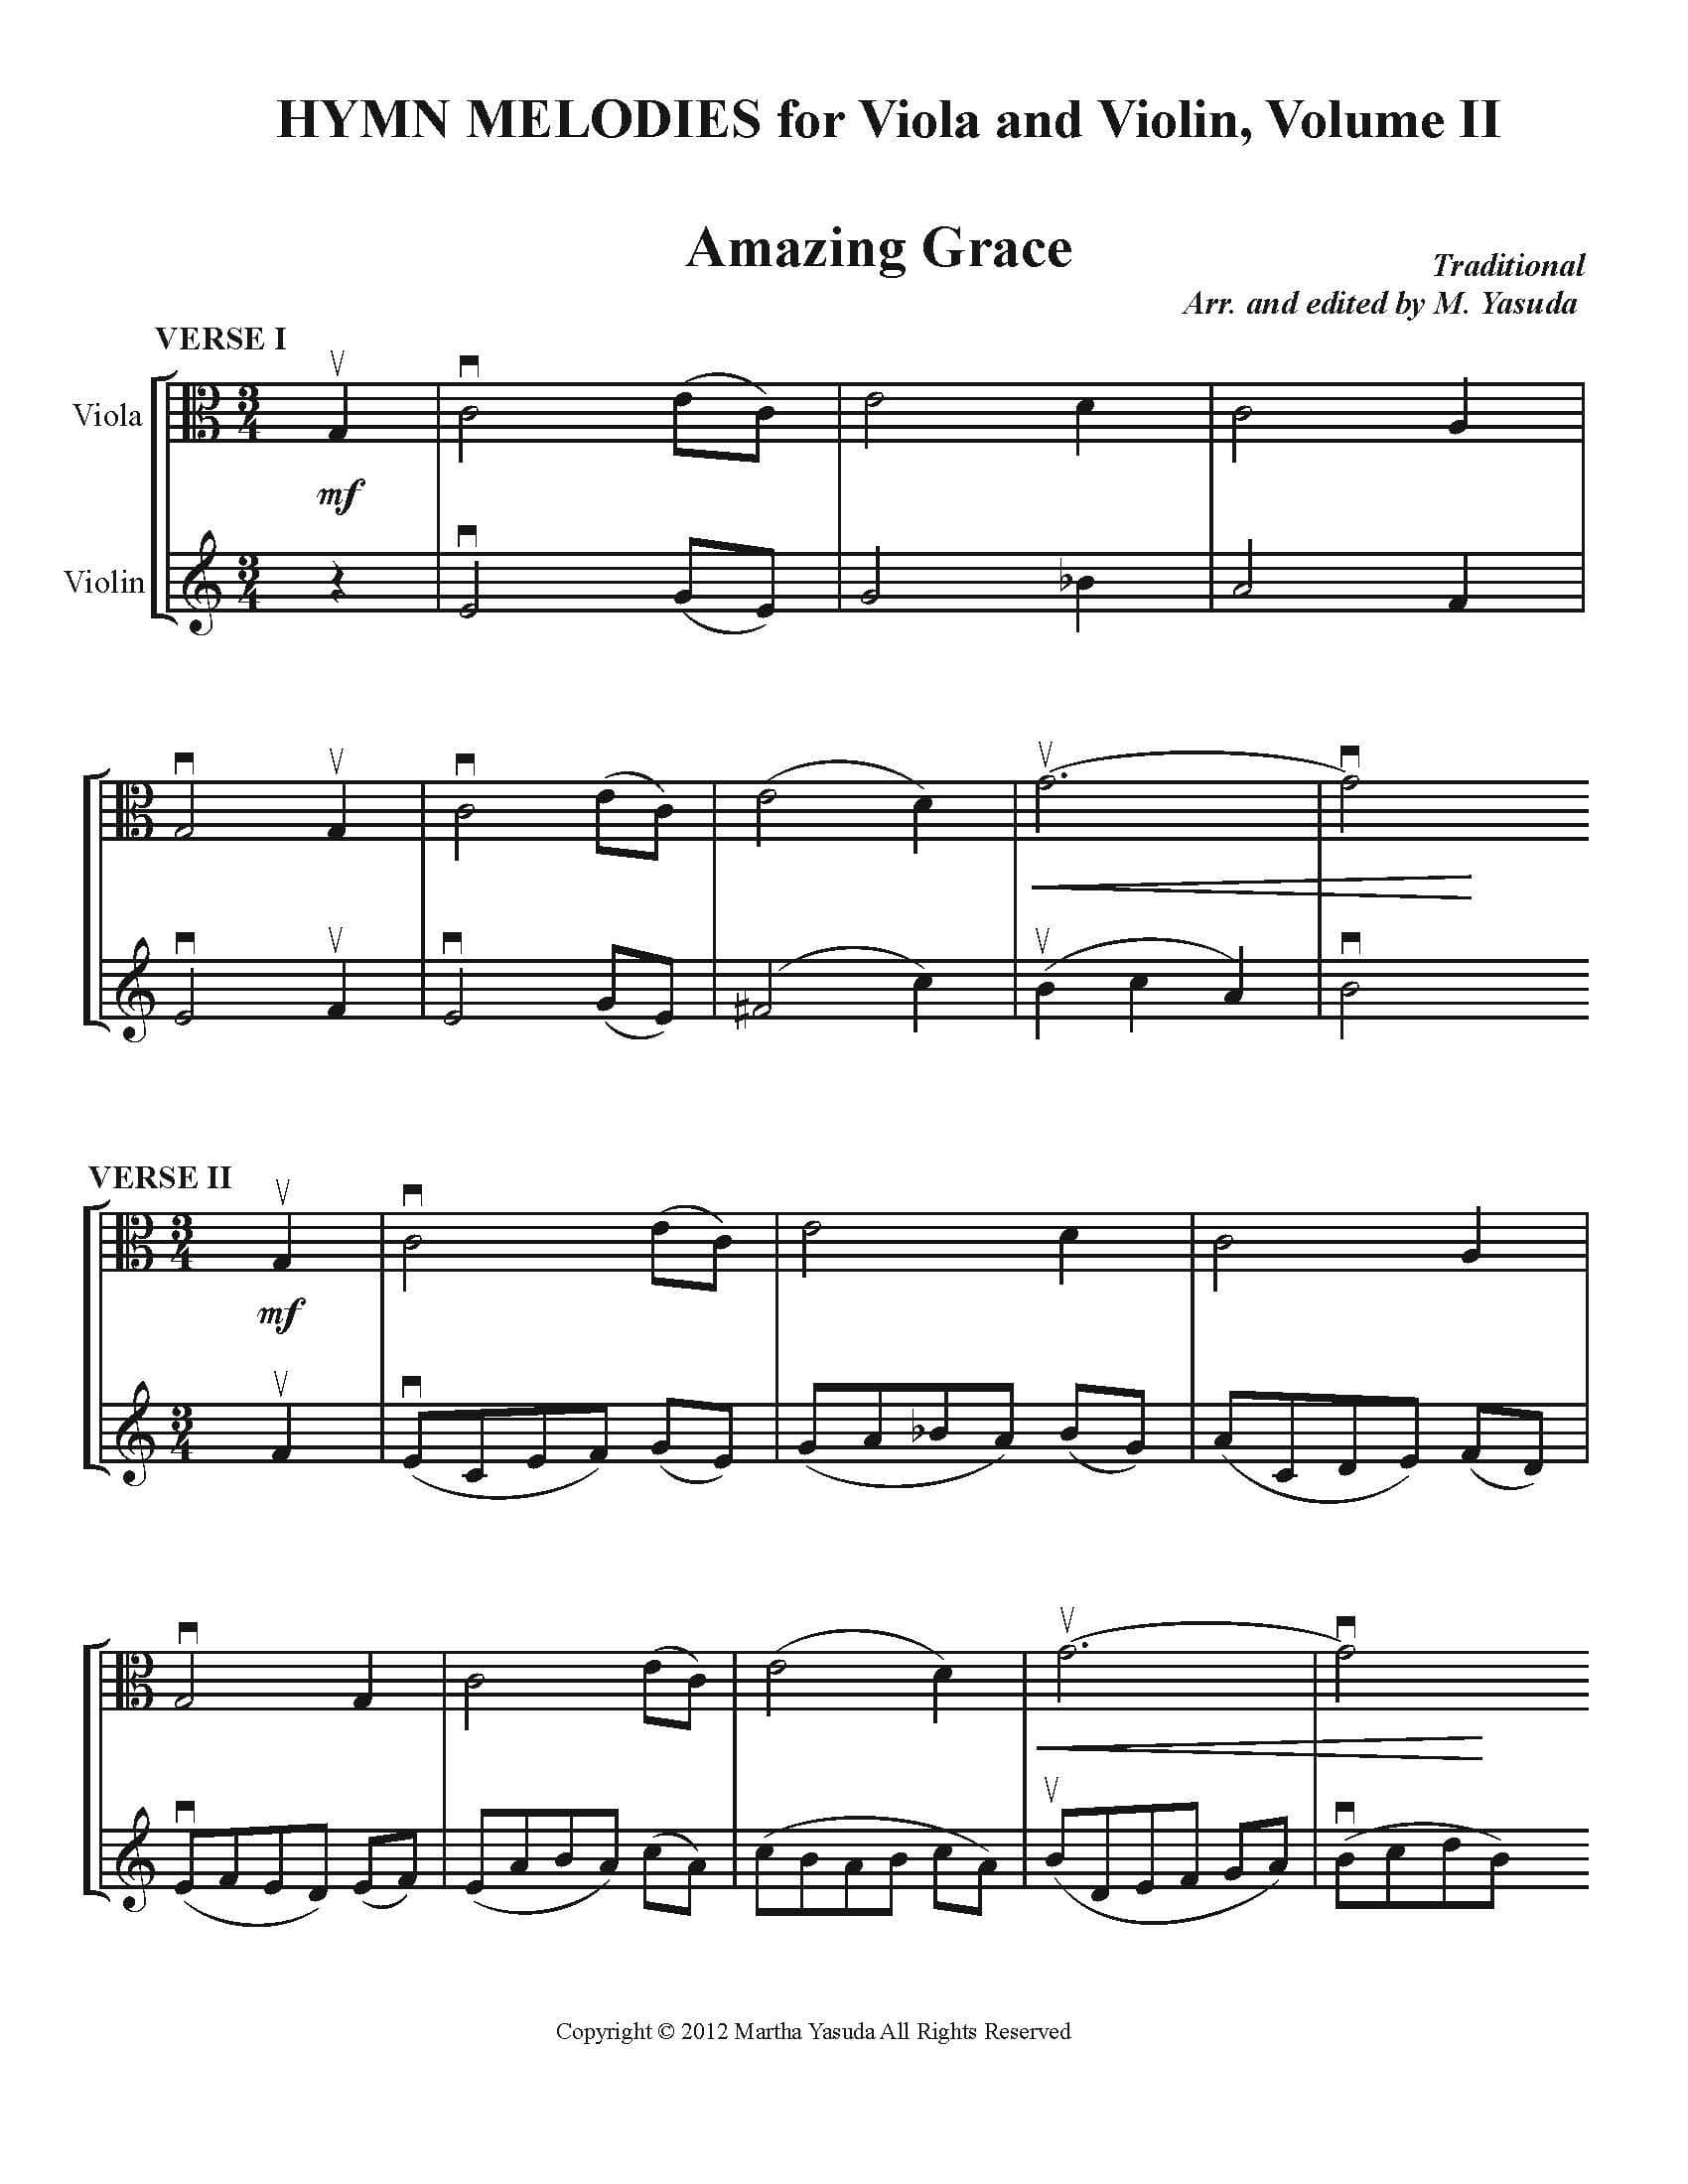 Yasuda, Martha - Hymn Melodies For Viola and Violin, Volume II - Digital Download